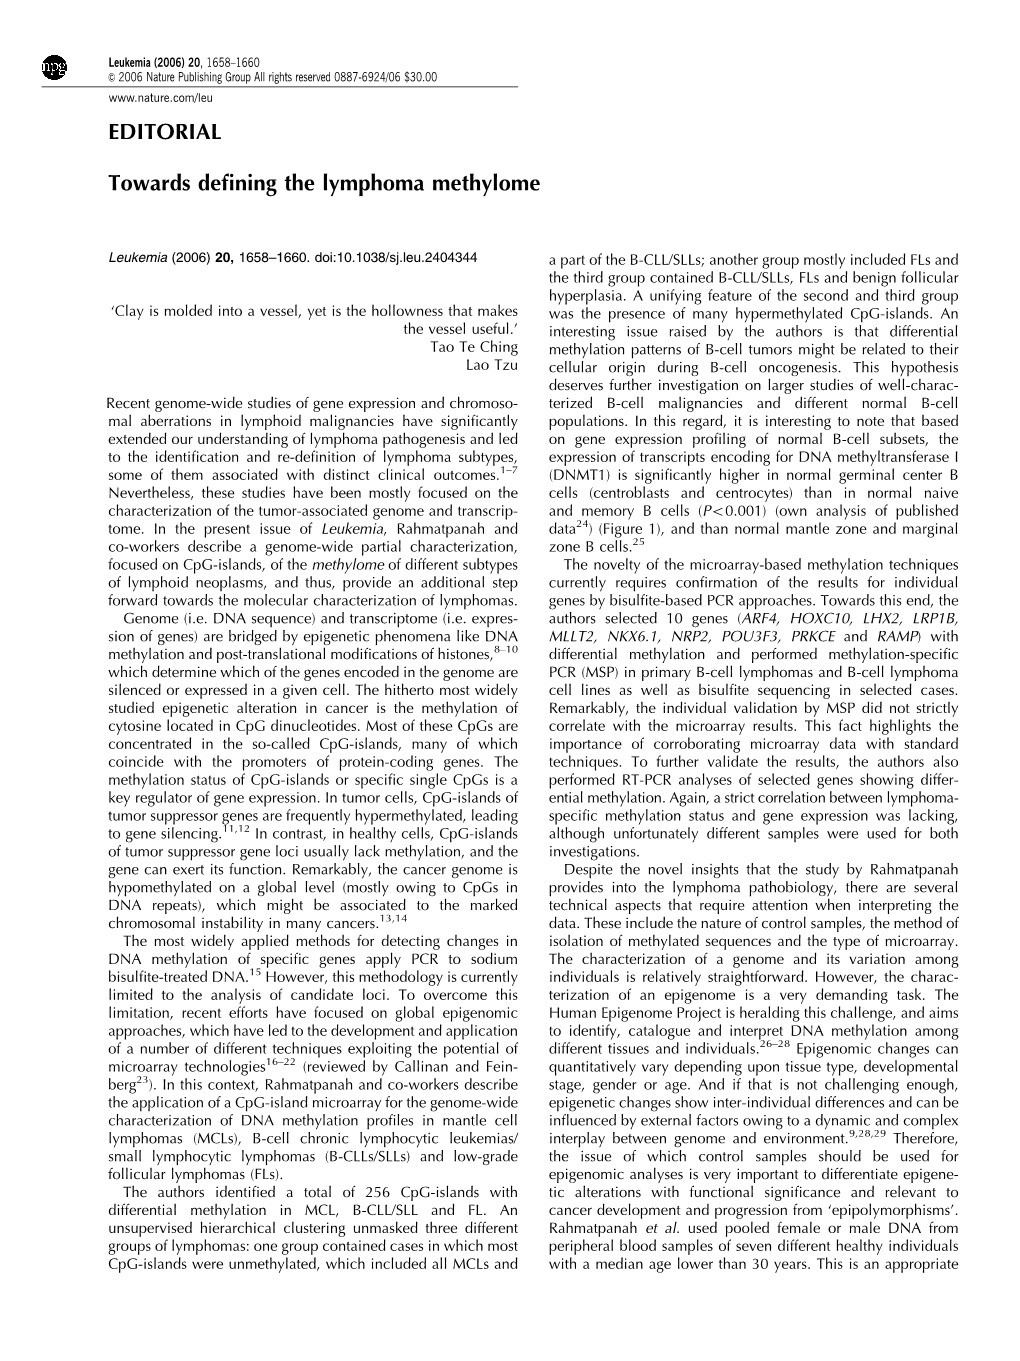 Towards Defining the Lymphoma Methylome